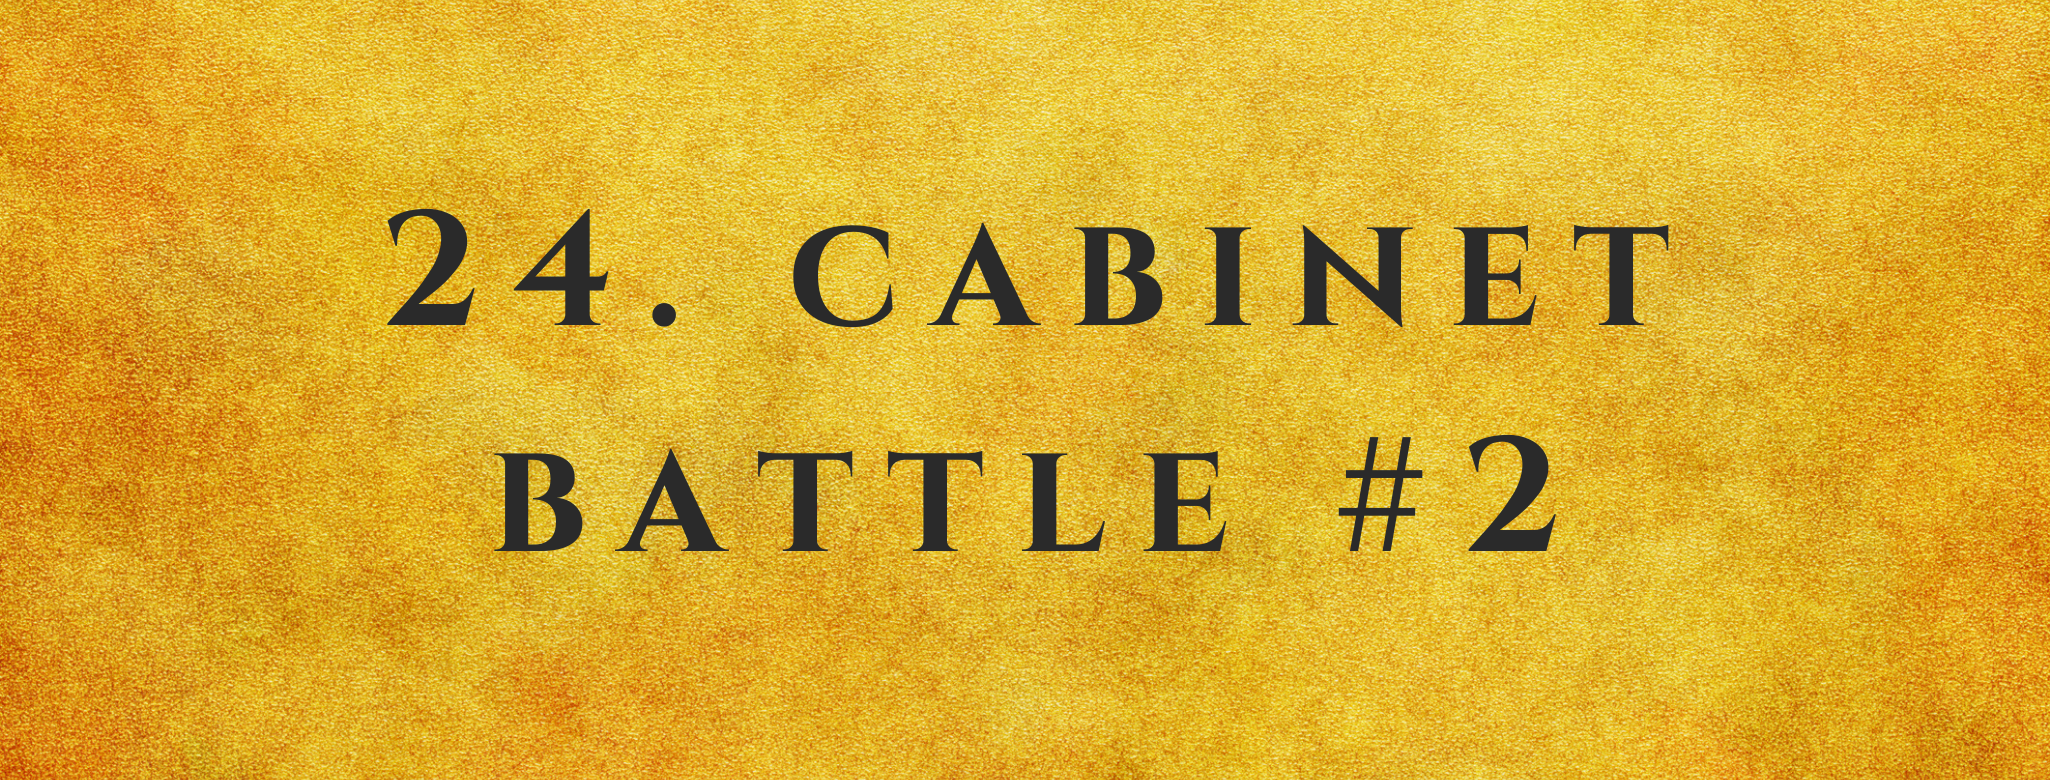 #24 Cabinet Battle #2